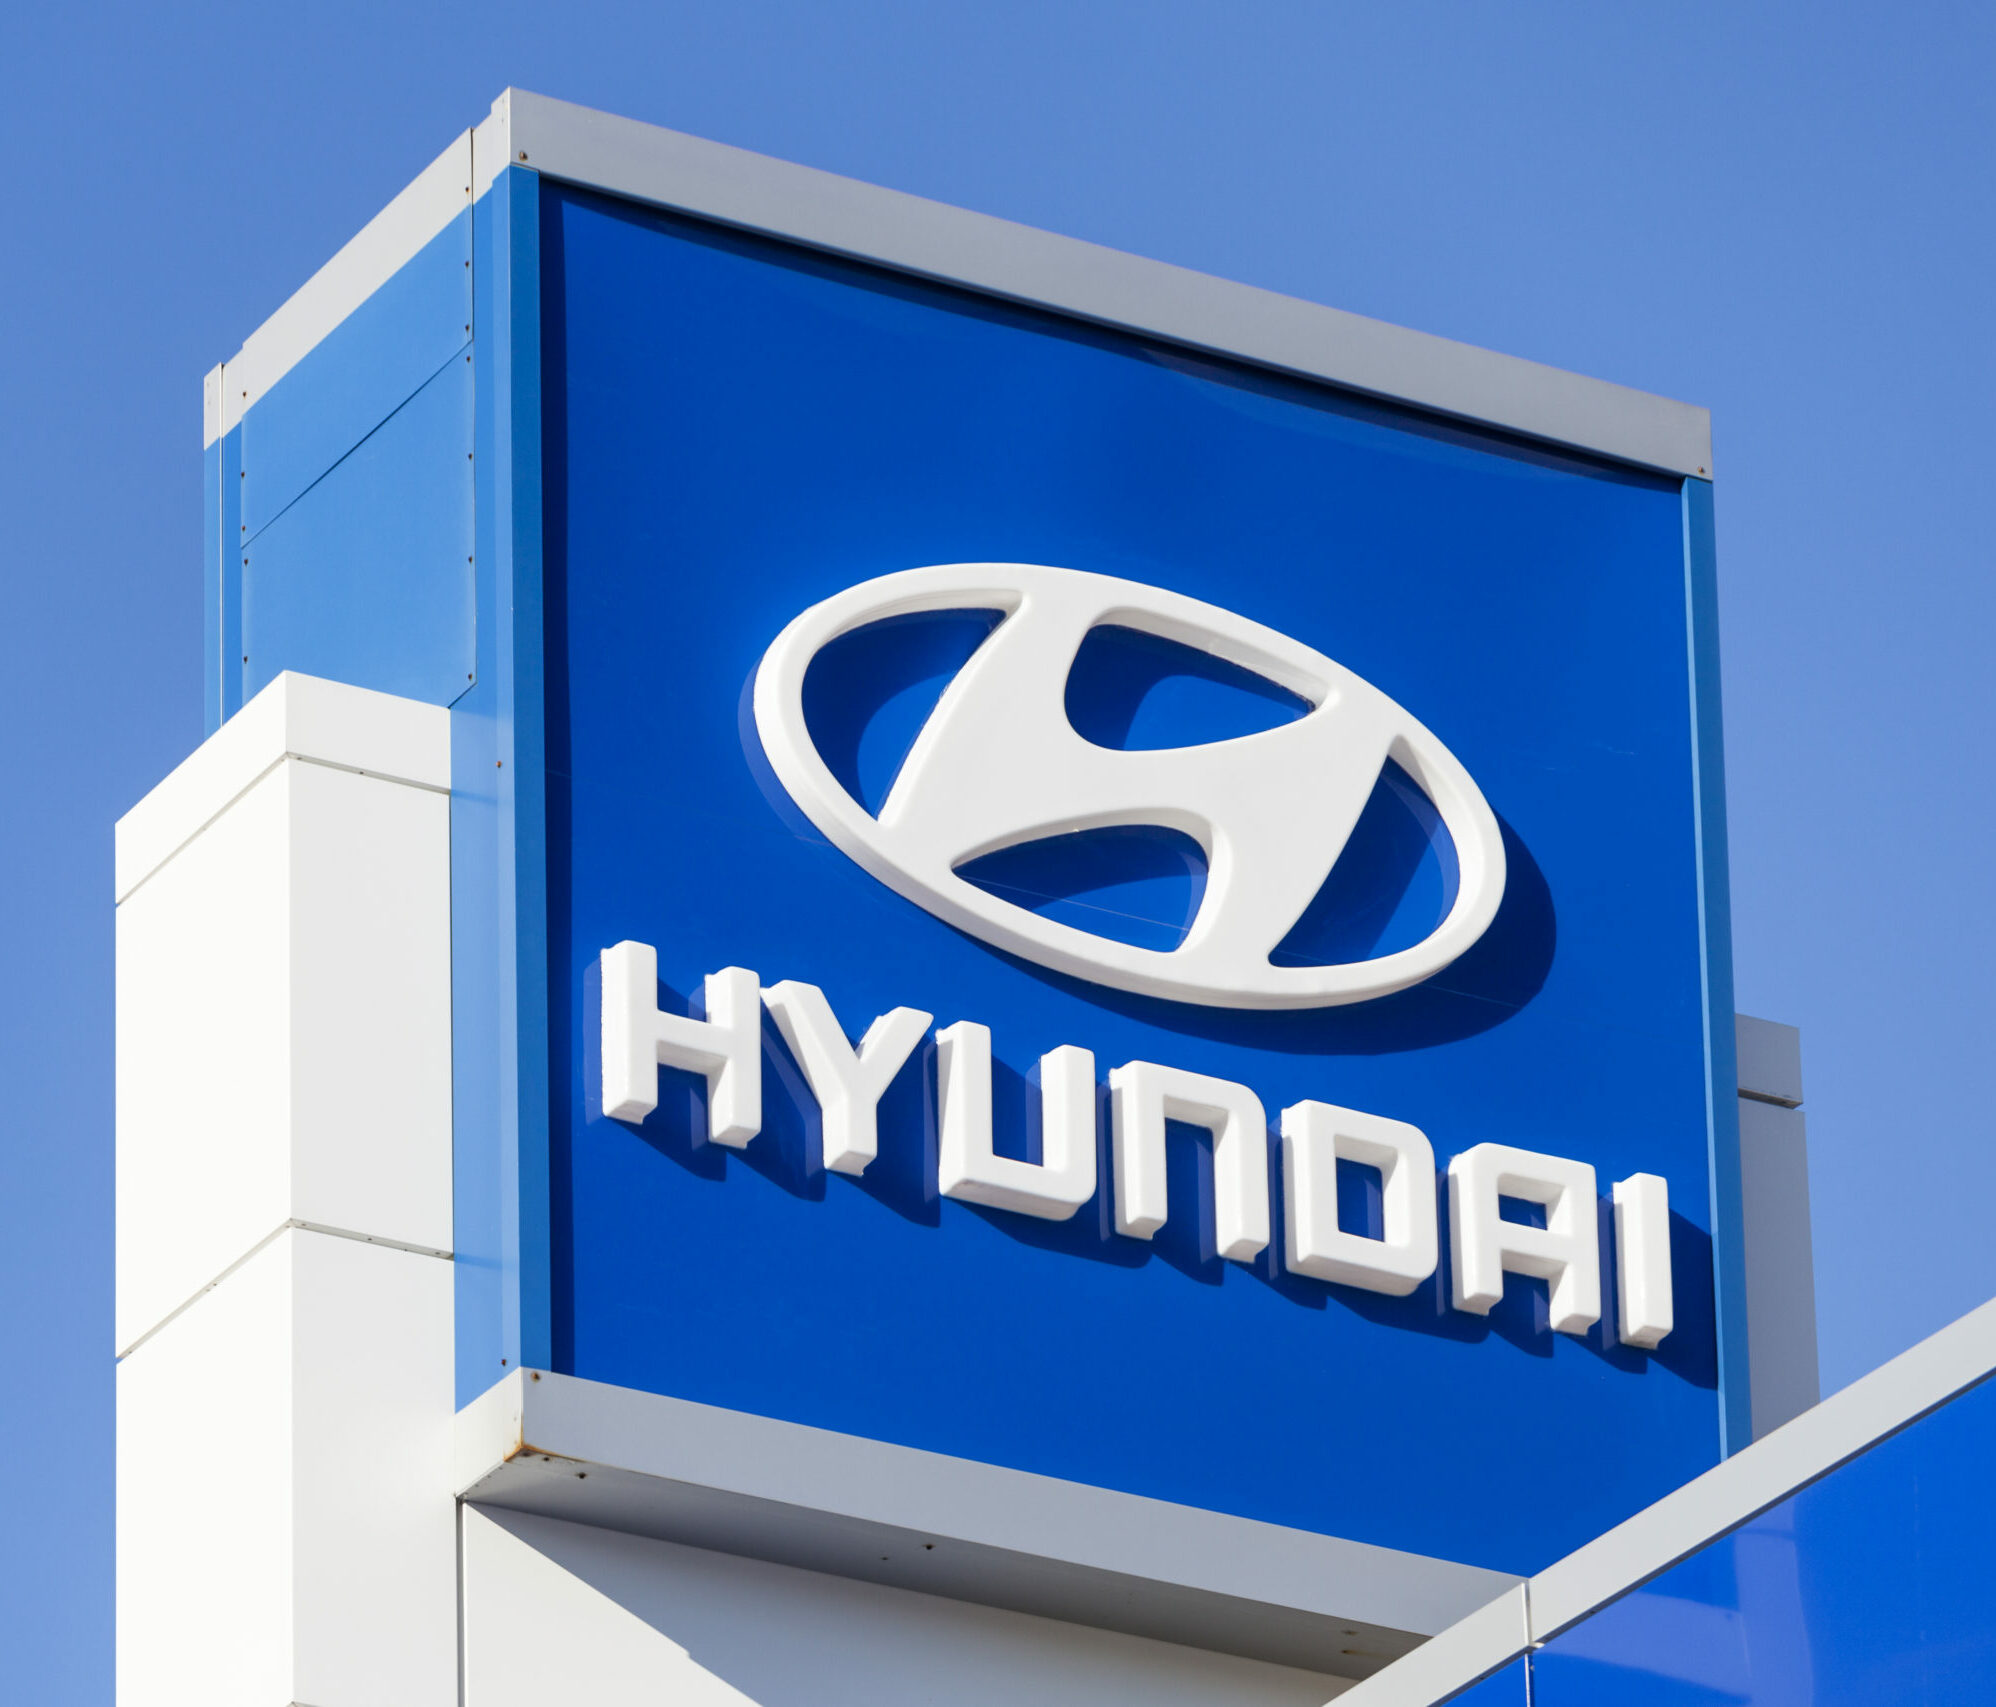  Hyundai rolls out monthly EV rental program - Repairer Driven News 